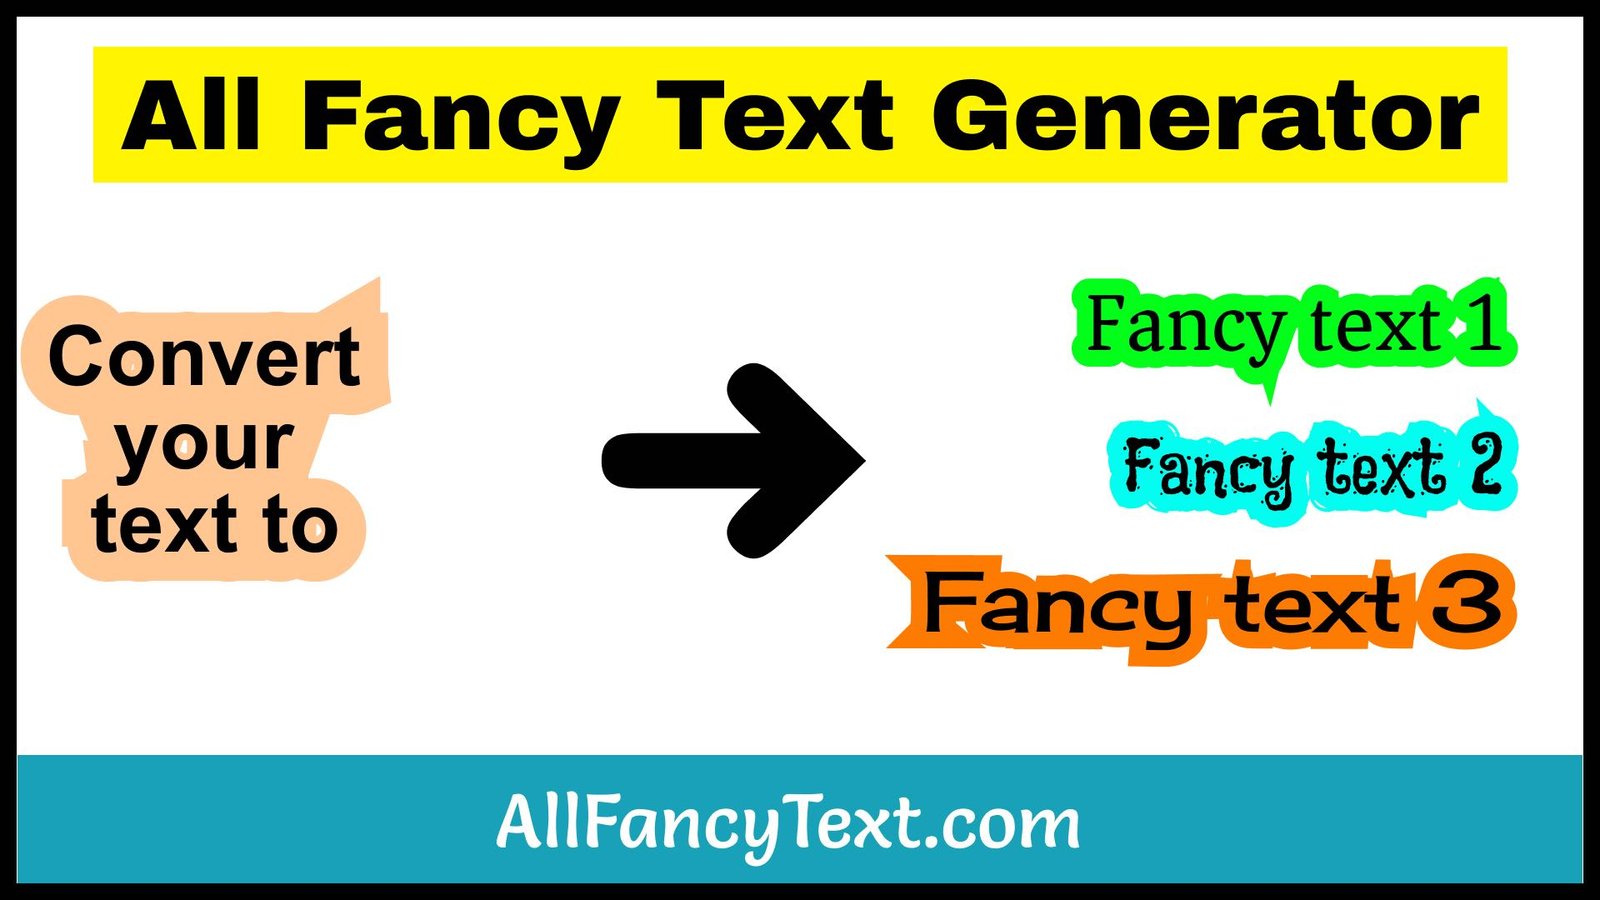 All Fancy Text Generator